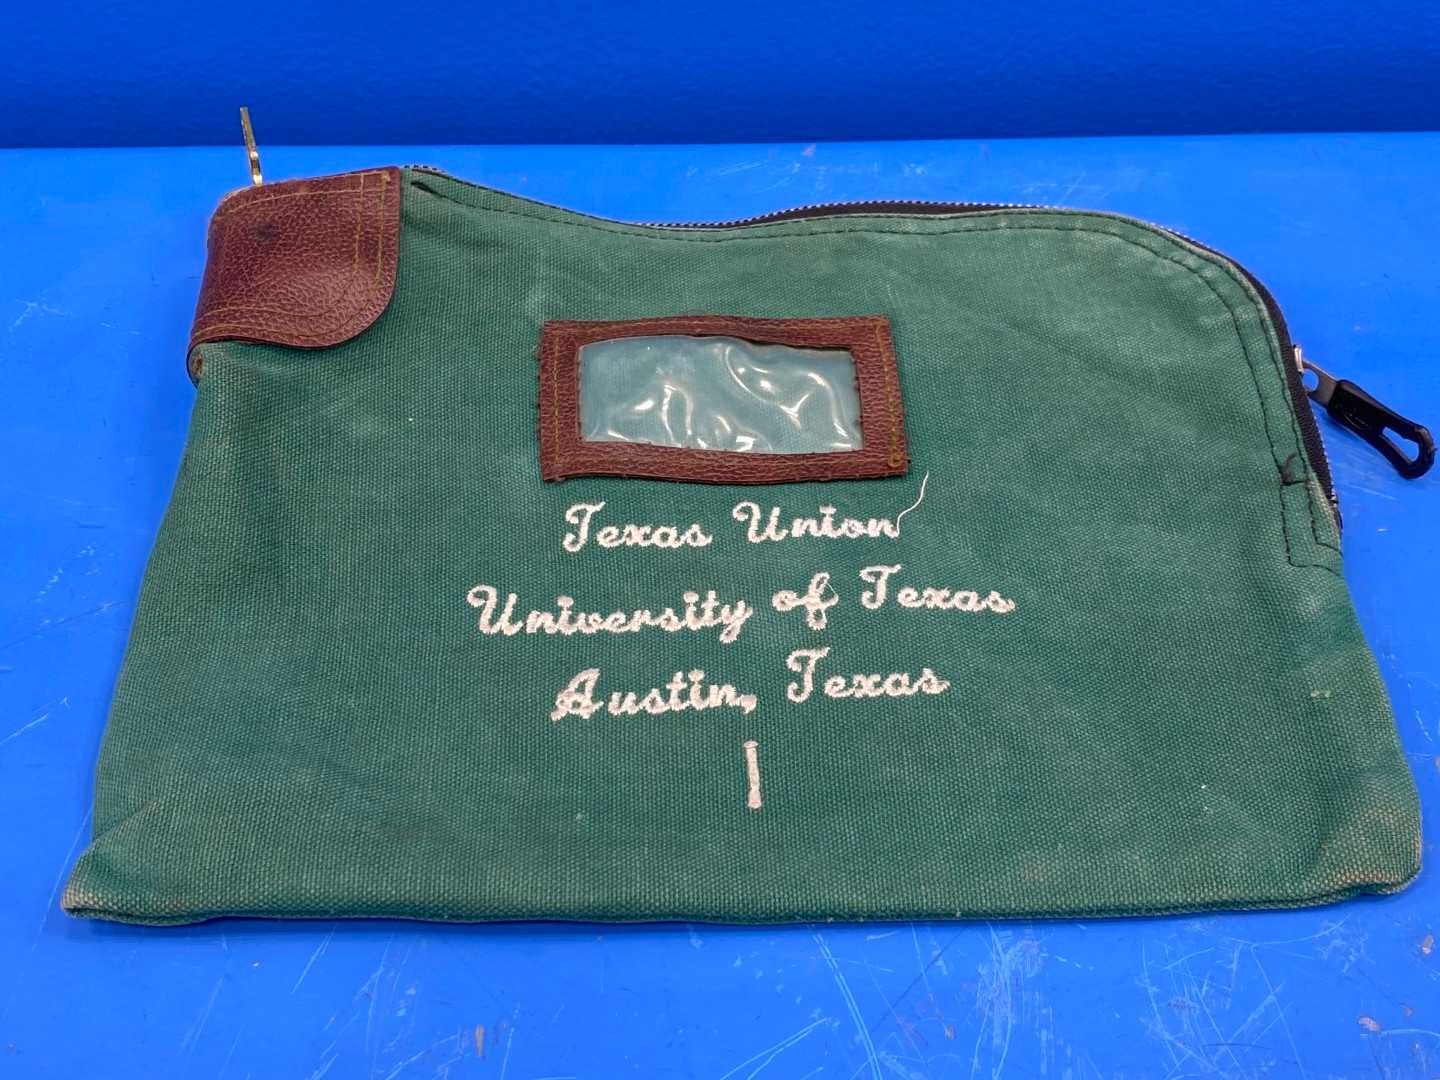 Vintage University of Texas Bank Bag Rifkin Safety w/ Arcolock 11"x9" (Green)